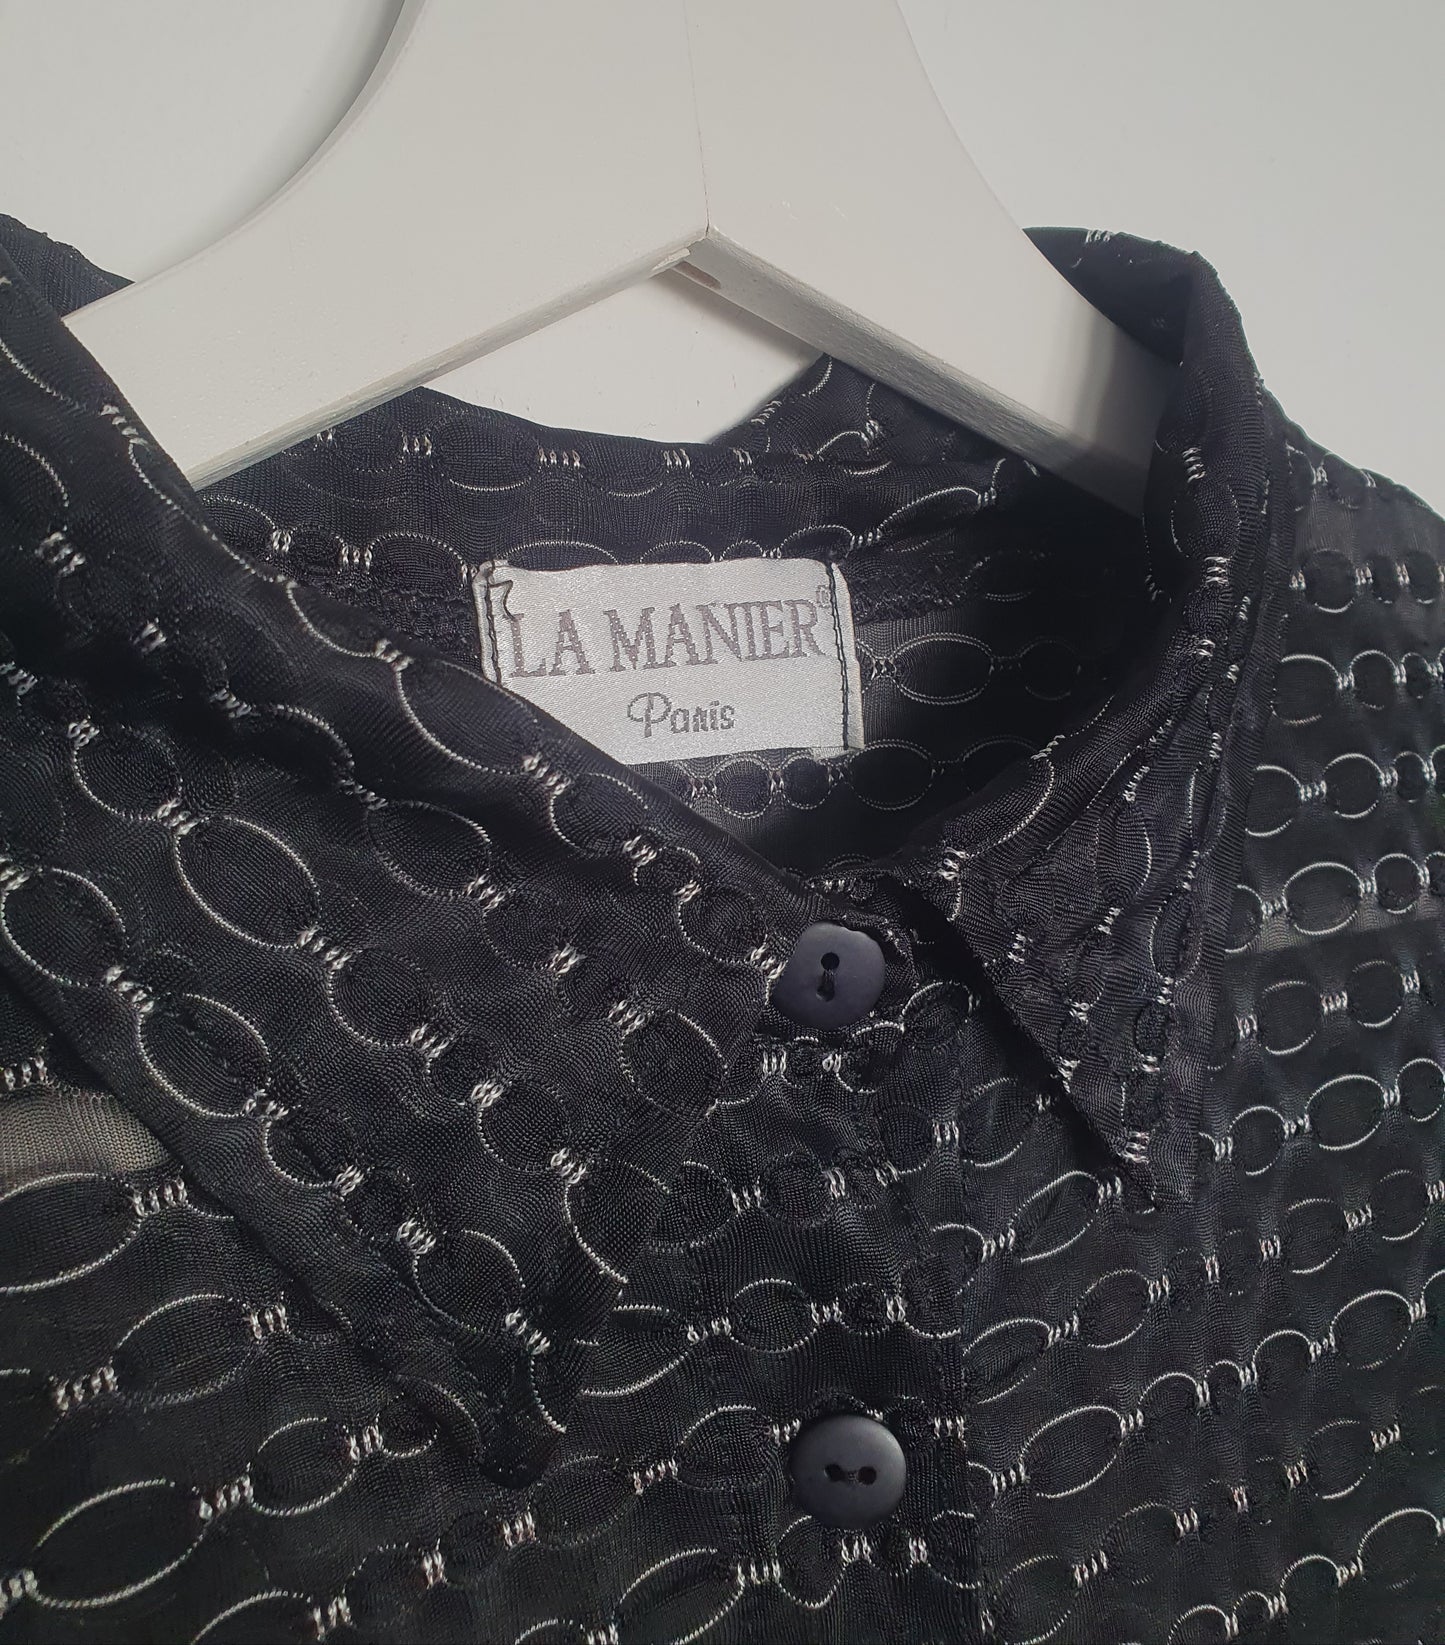 LA MANIER Paris majica sa srebrom i teksturom, vintage